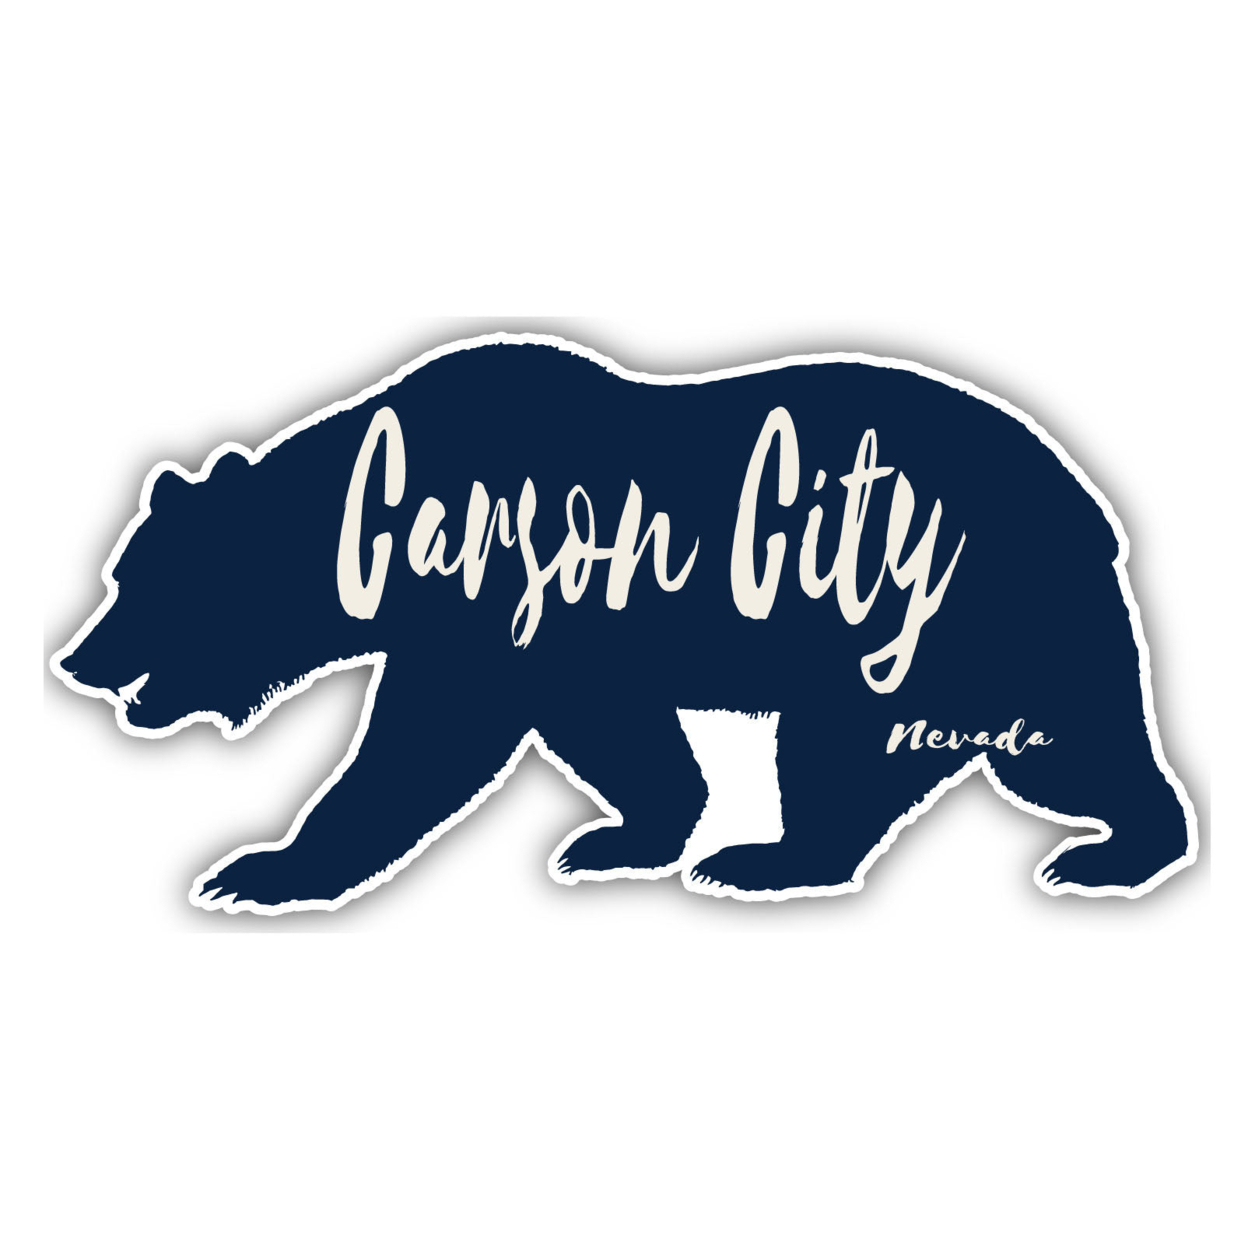 Carson City Nevada Souvenir Decorative Stickers (Choose Theme And Size) - Single Unit, 12-Inch, Bear